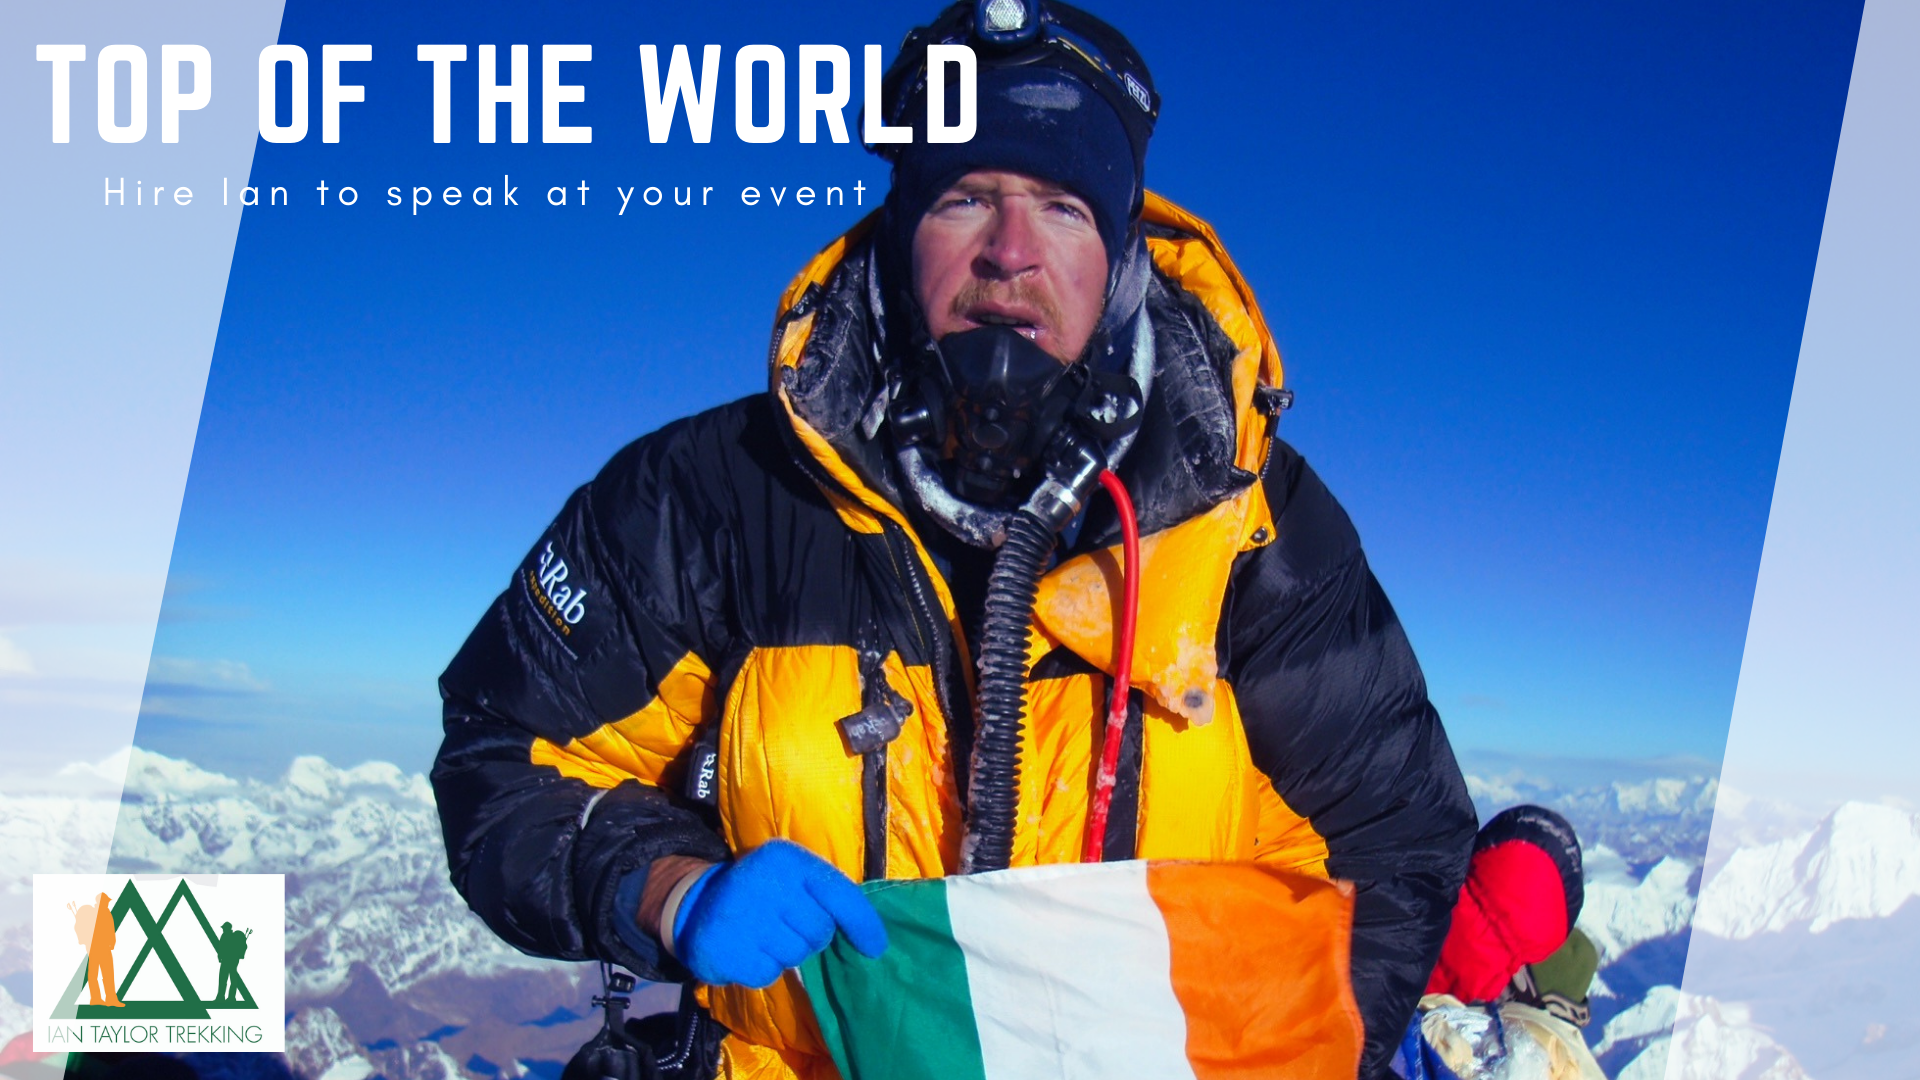 Scaling the world's tallest mountains - Ian Taylor Trekking